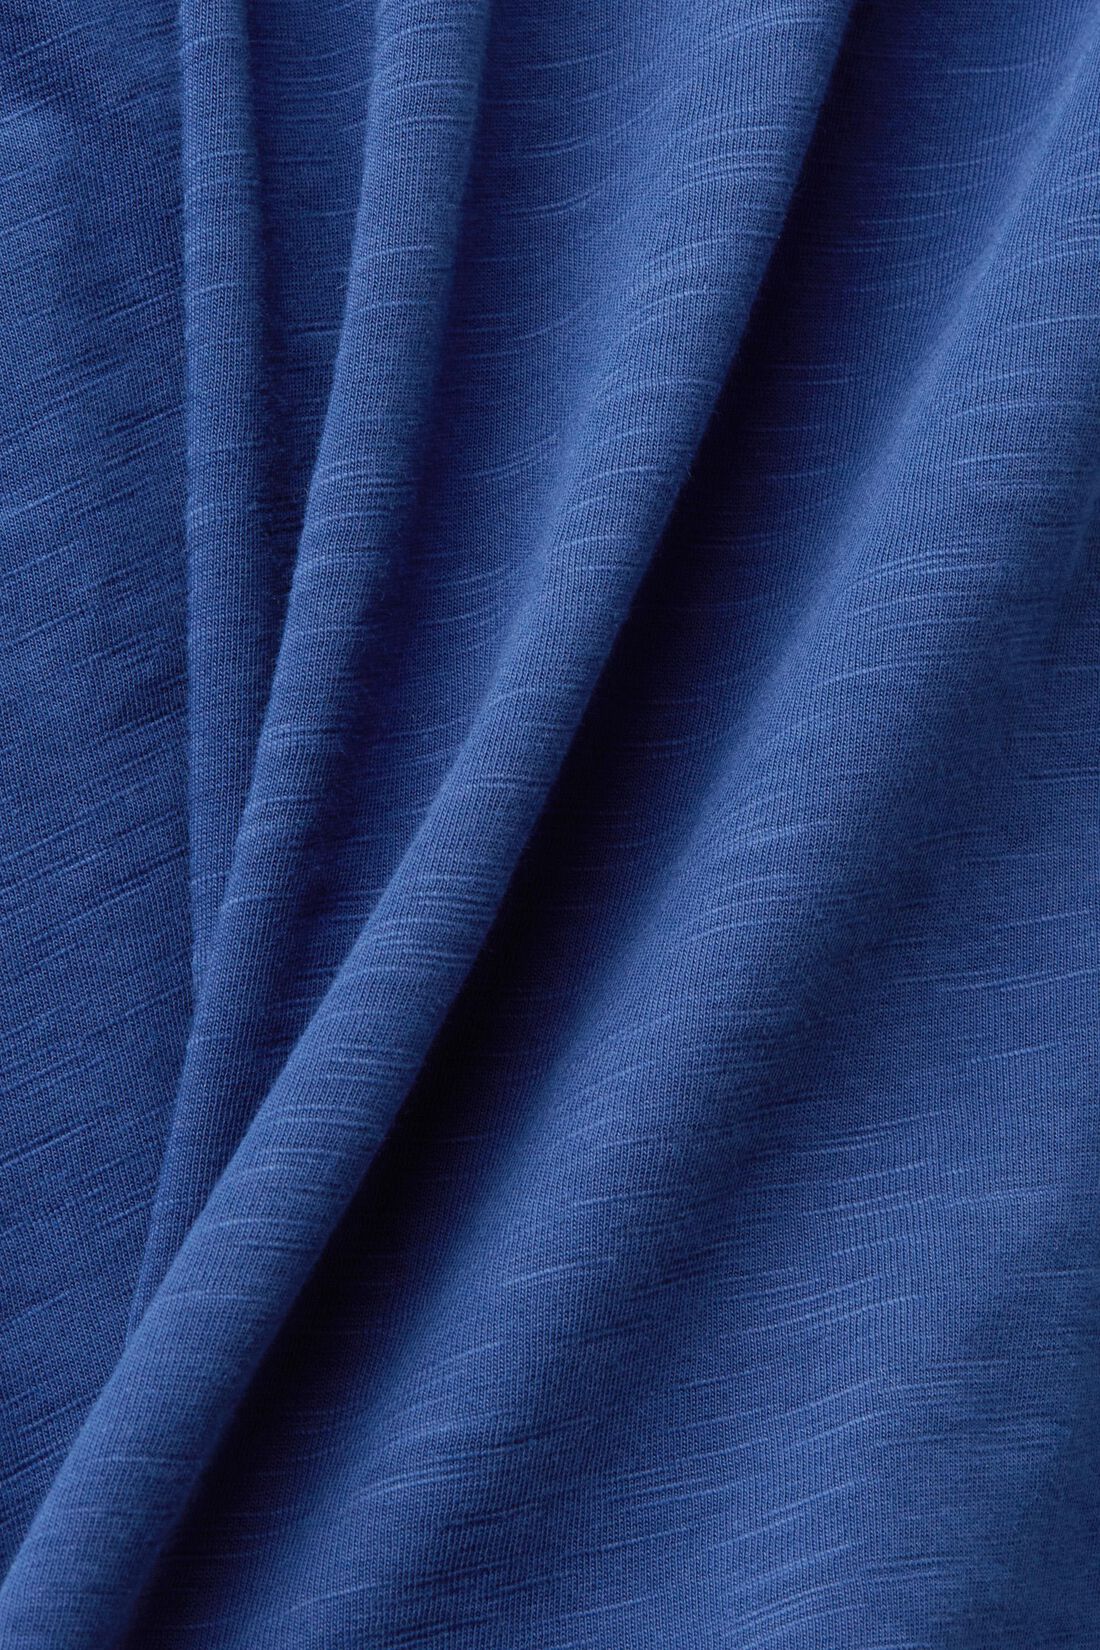 Esprit shortama korte mouw effen - Cotton slub sus 033ER1Y312 - dark blue